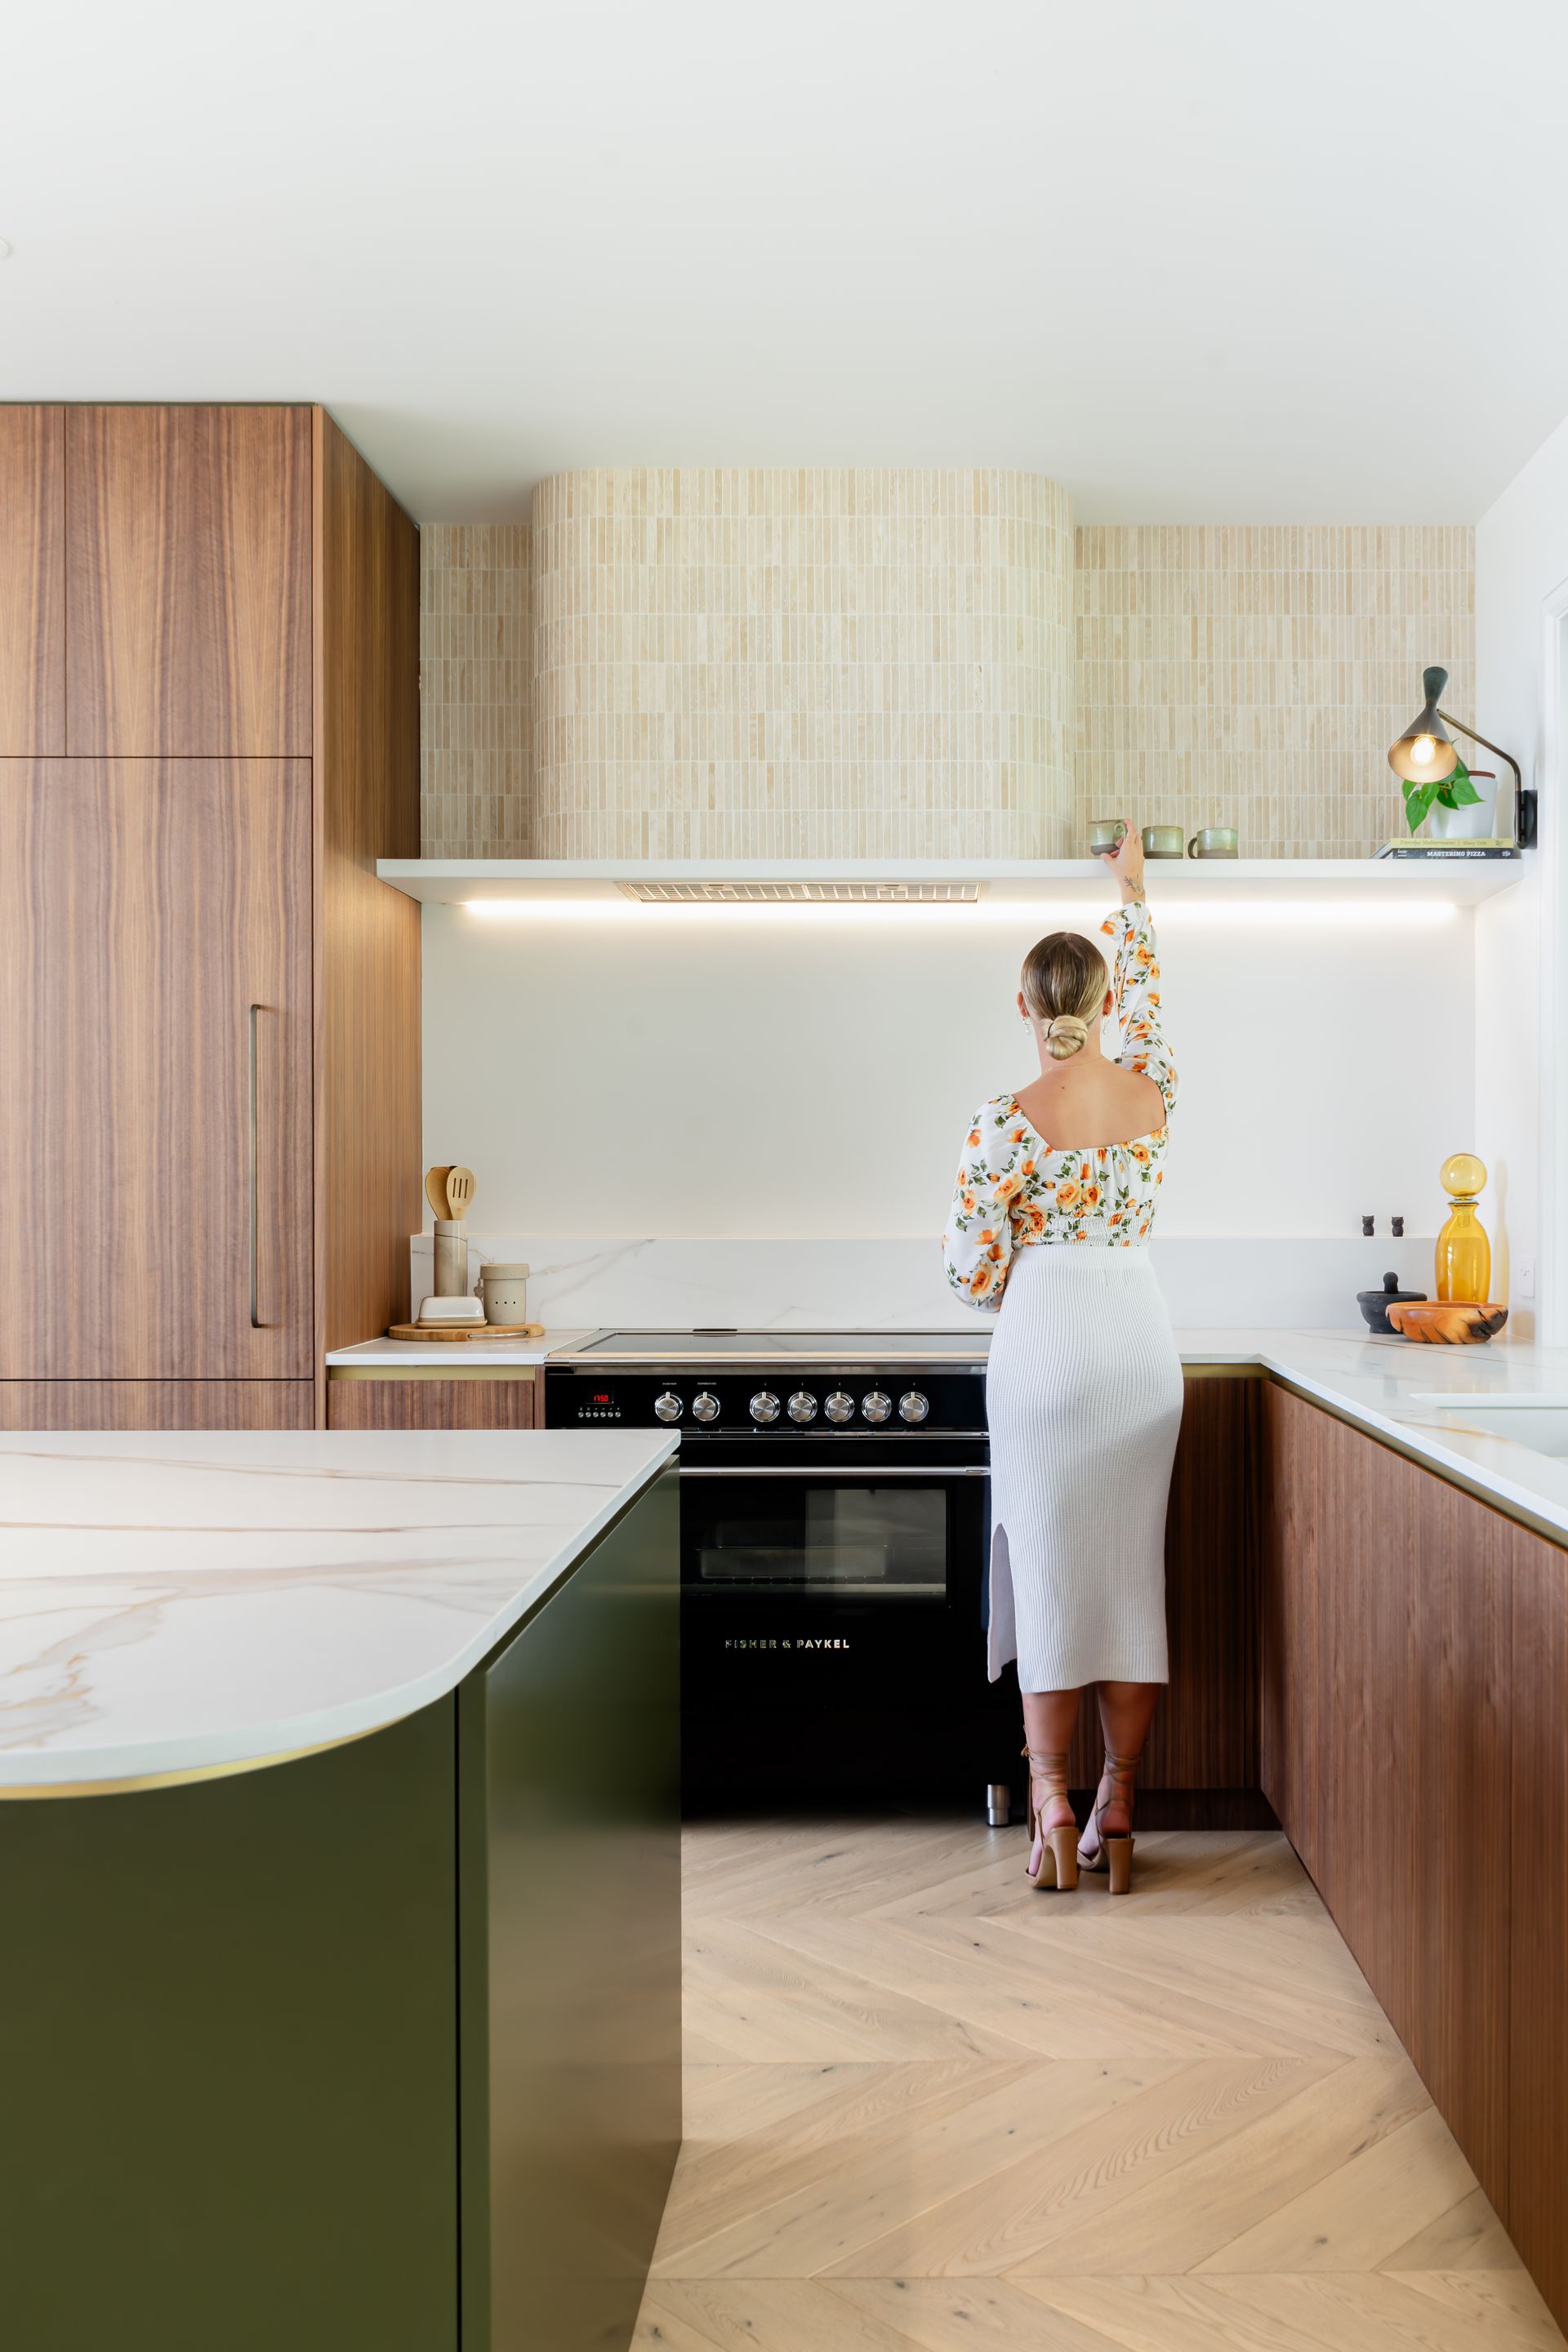 This new kitchen style is a Mid Century modern custom kitchen design by our Vista Kitchens dream kitchens Newcastle team